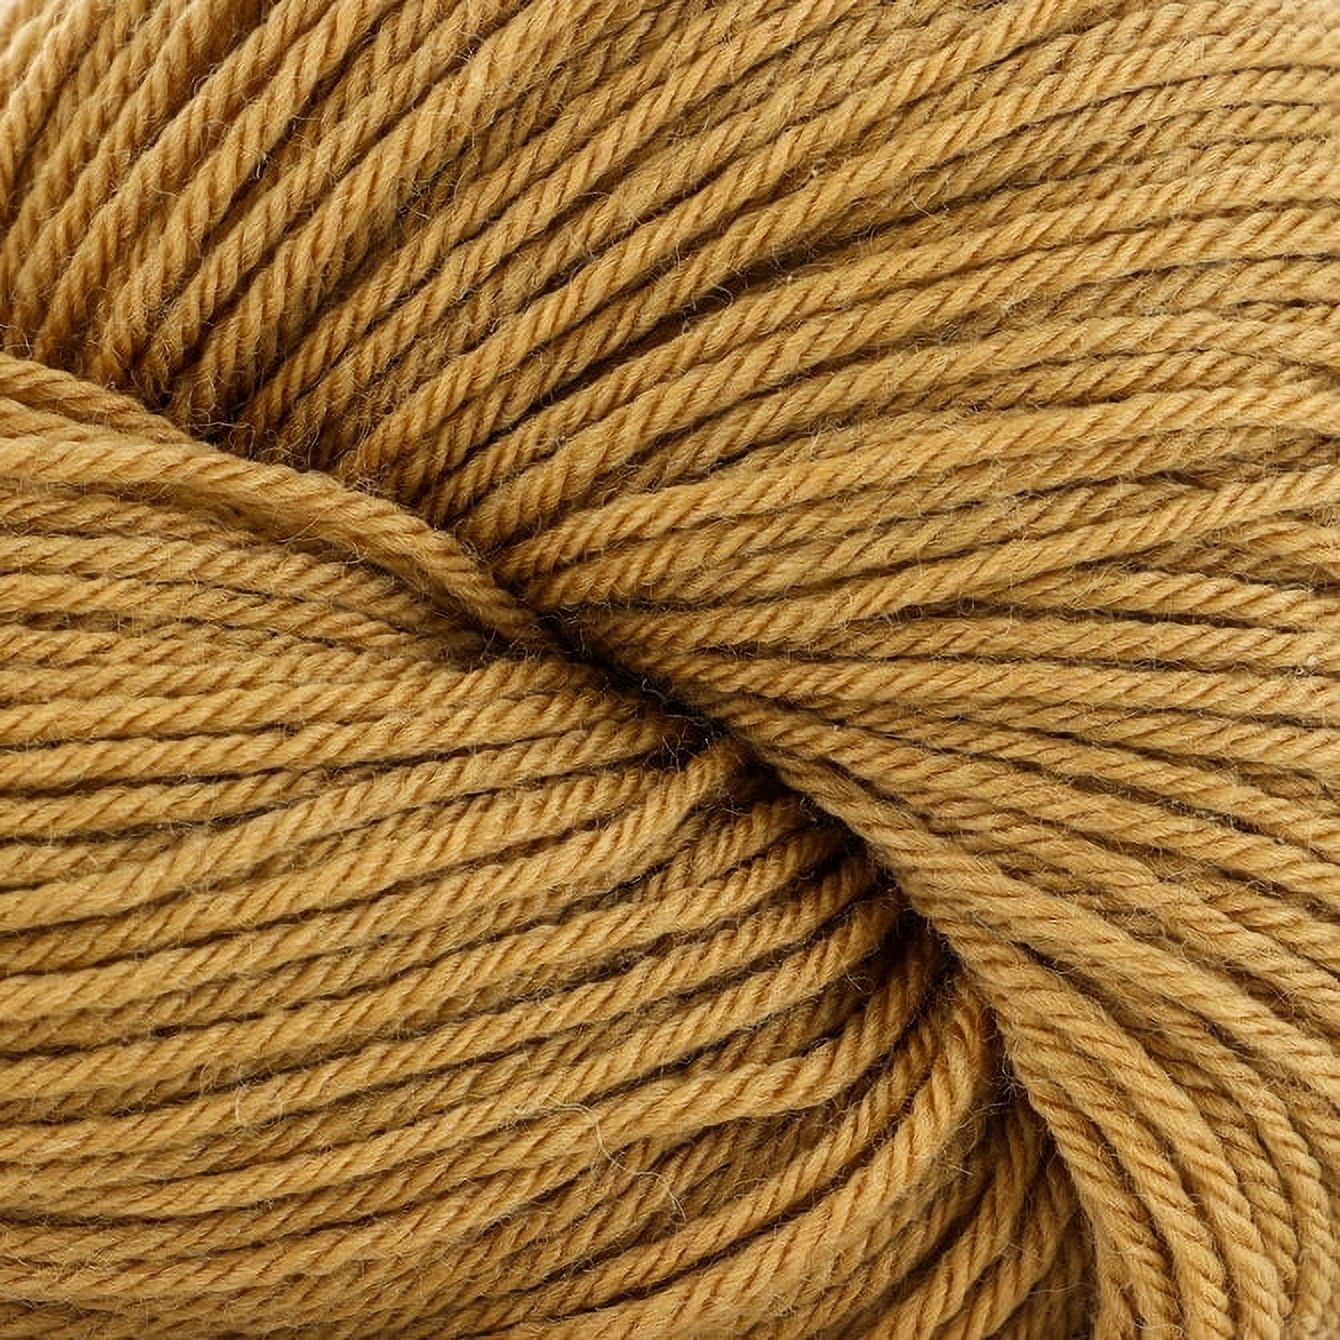 Sapling Sock (75% wool, 25% nylon) - fingering weight knitting